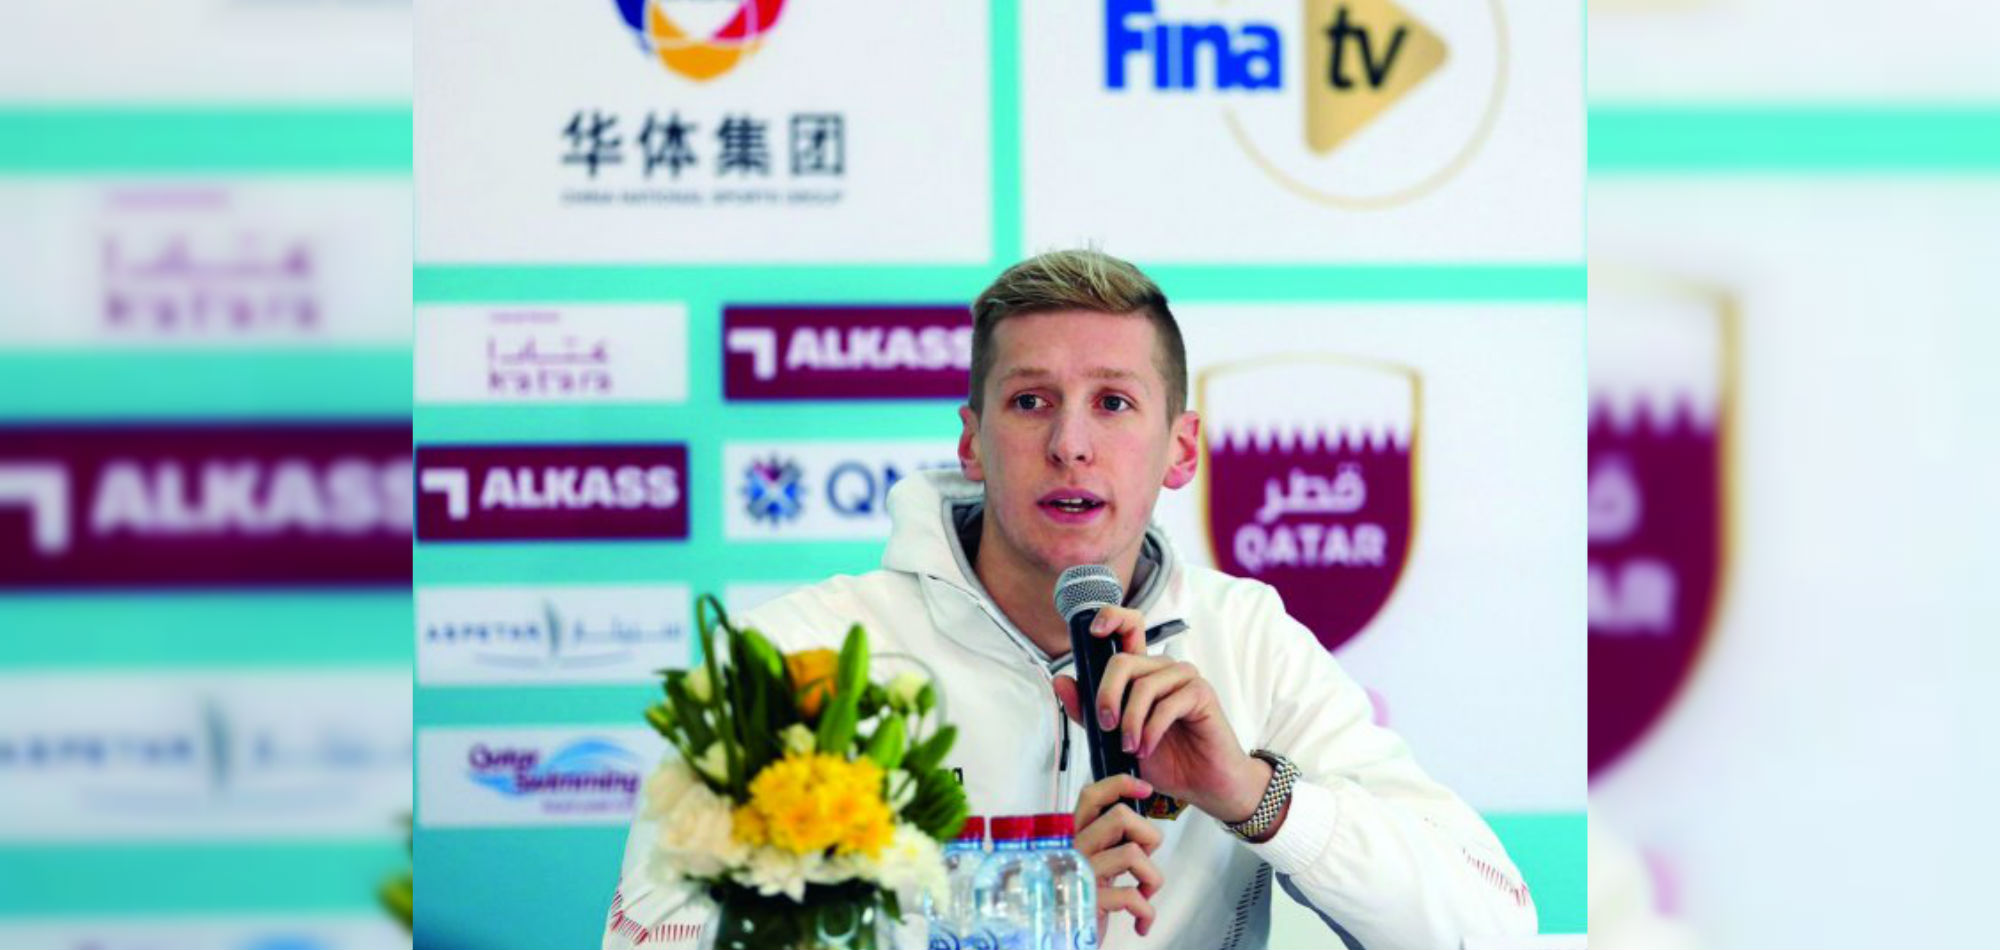 Doha will host amazing 2023 FINA Worlds, says Wellbrock